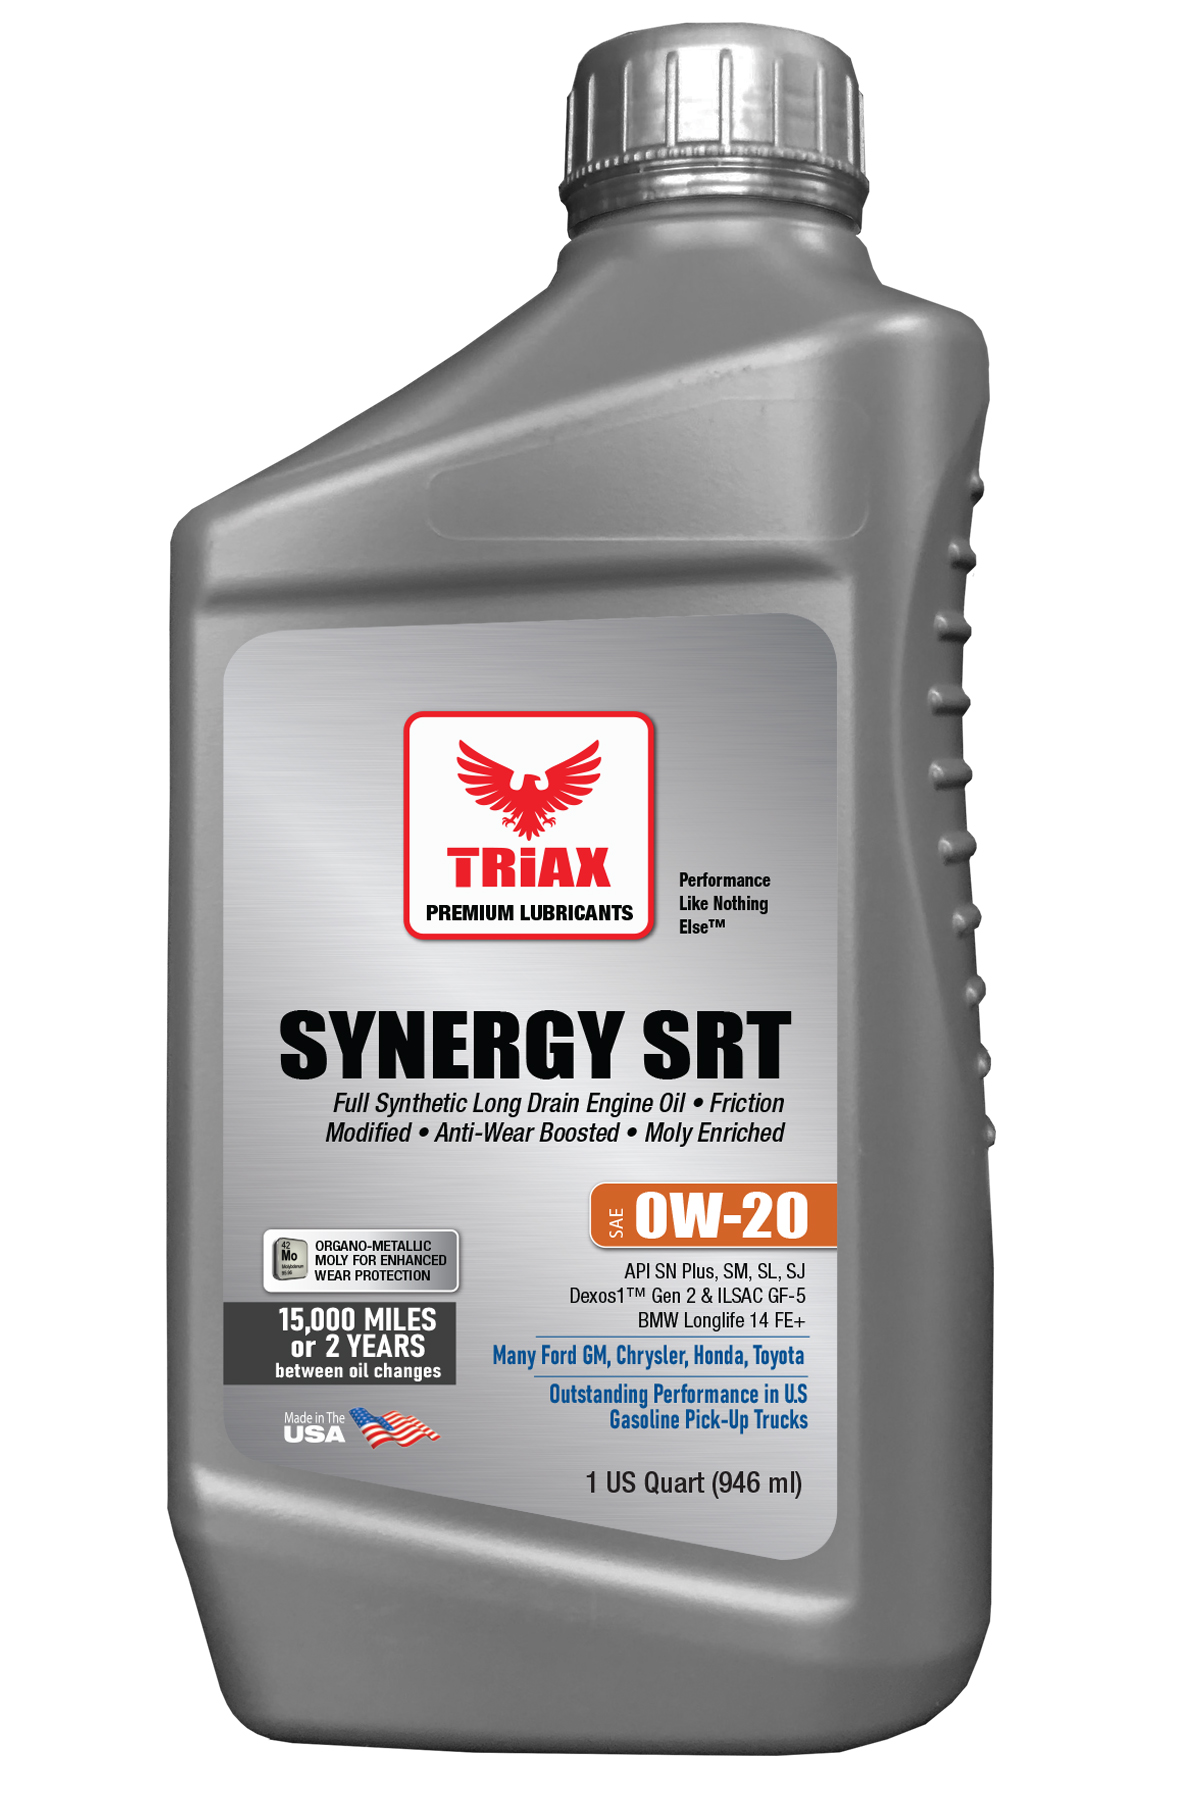 TRIAX SYNERGY SRT 0W-20 Full Synthetic